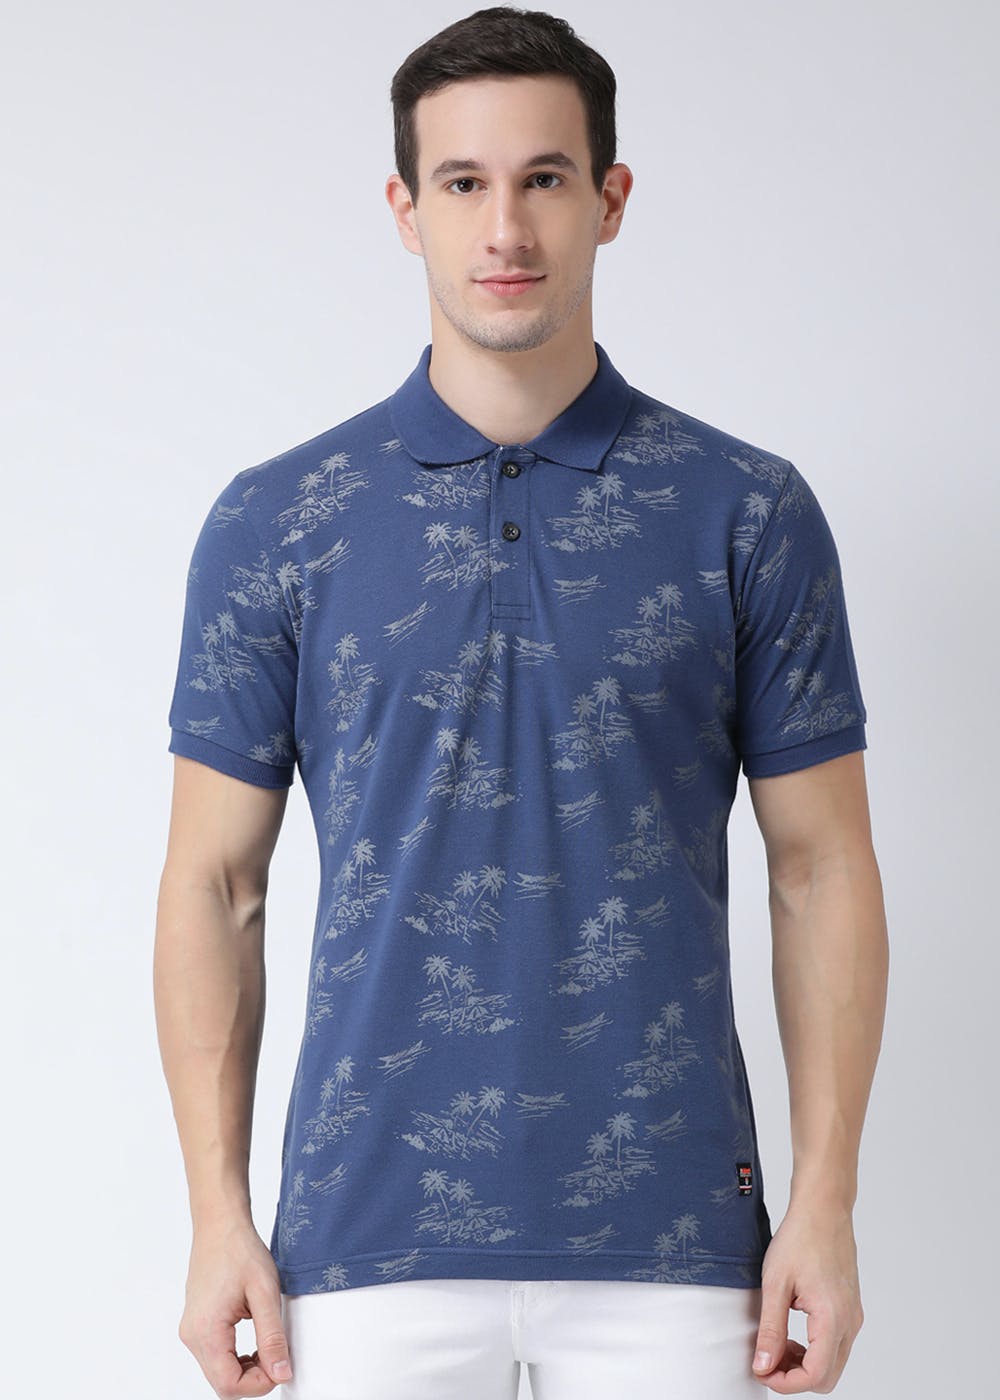 Get Palm Tree Printed Blue Polo T-Shirt at ₹ 899 | LBB Shop